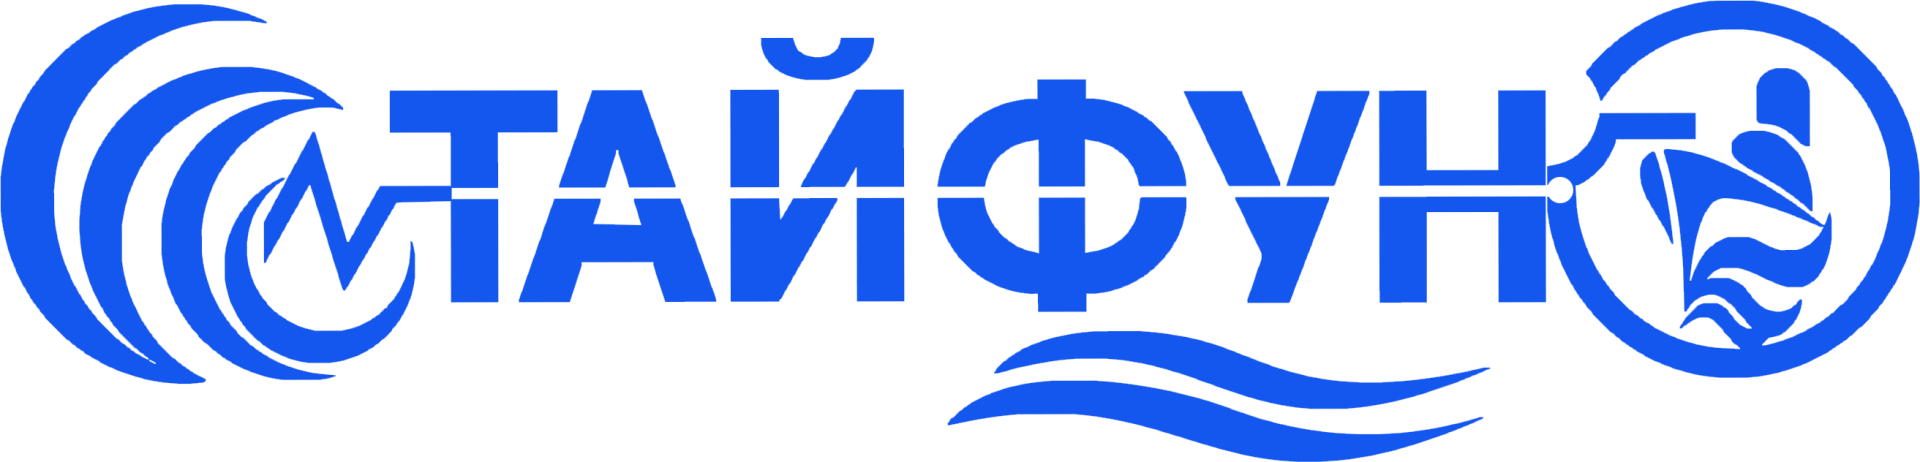 логотип синий.png